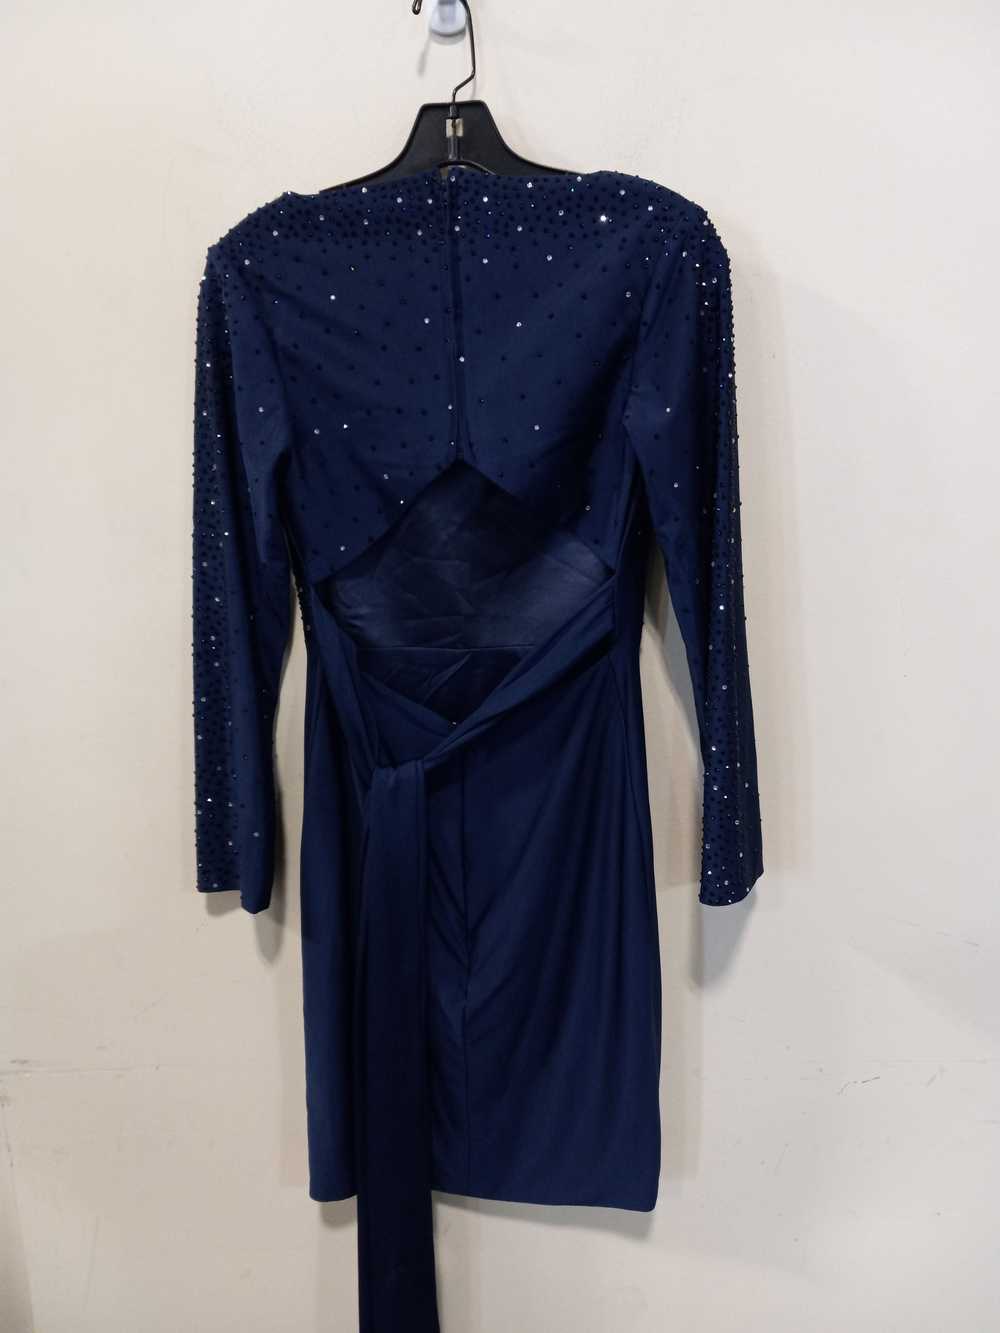 Ada's Bridal Blue Rhinestone Accent Dress - image 5